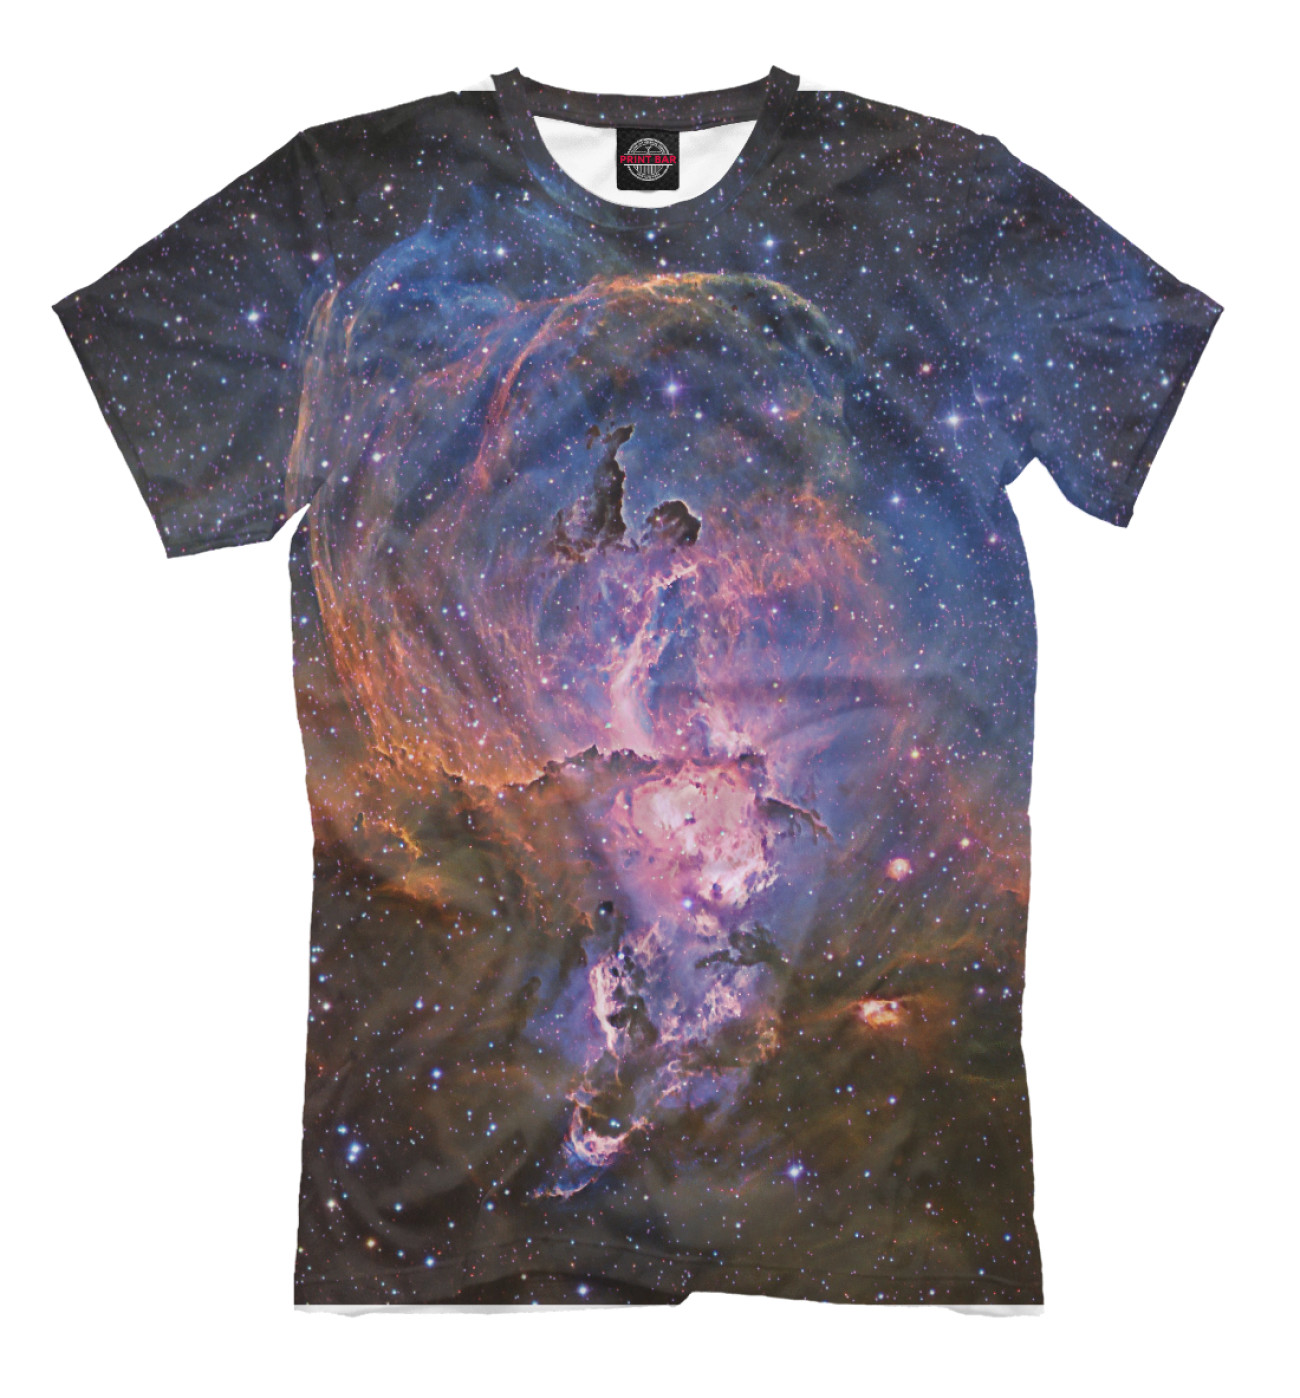 Мужская Футболка Statue of Liberty nebula / Туманность Статуя Свободы (NGC 3576), артикул: NSA-621190-fut-2